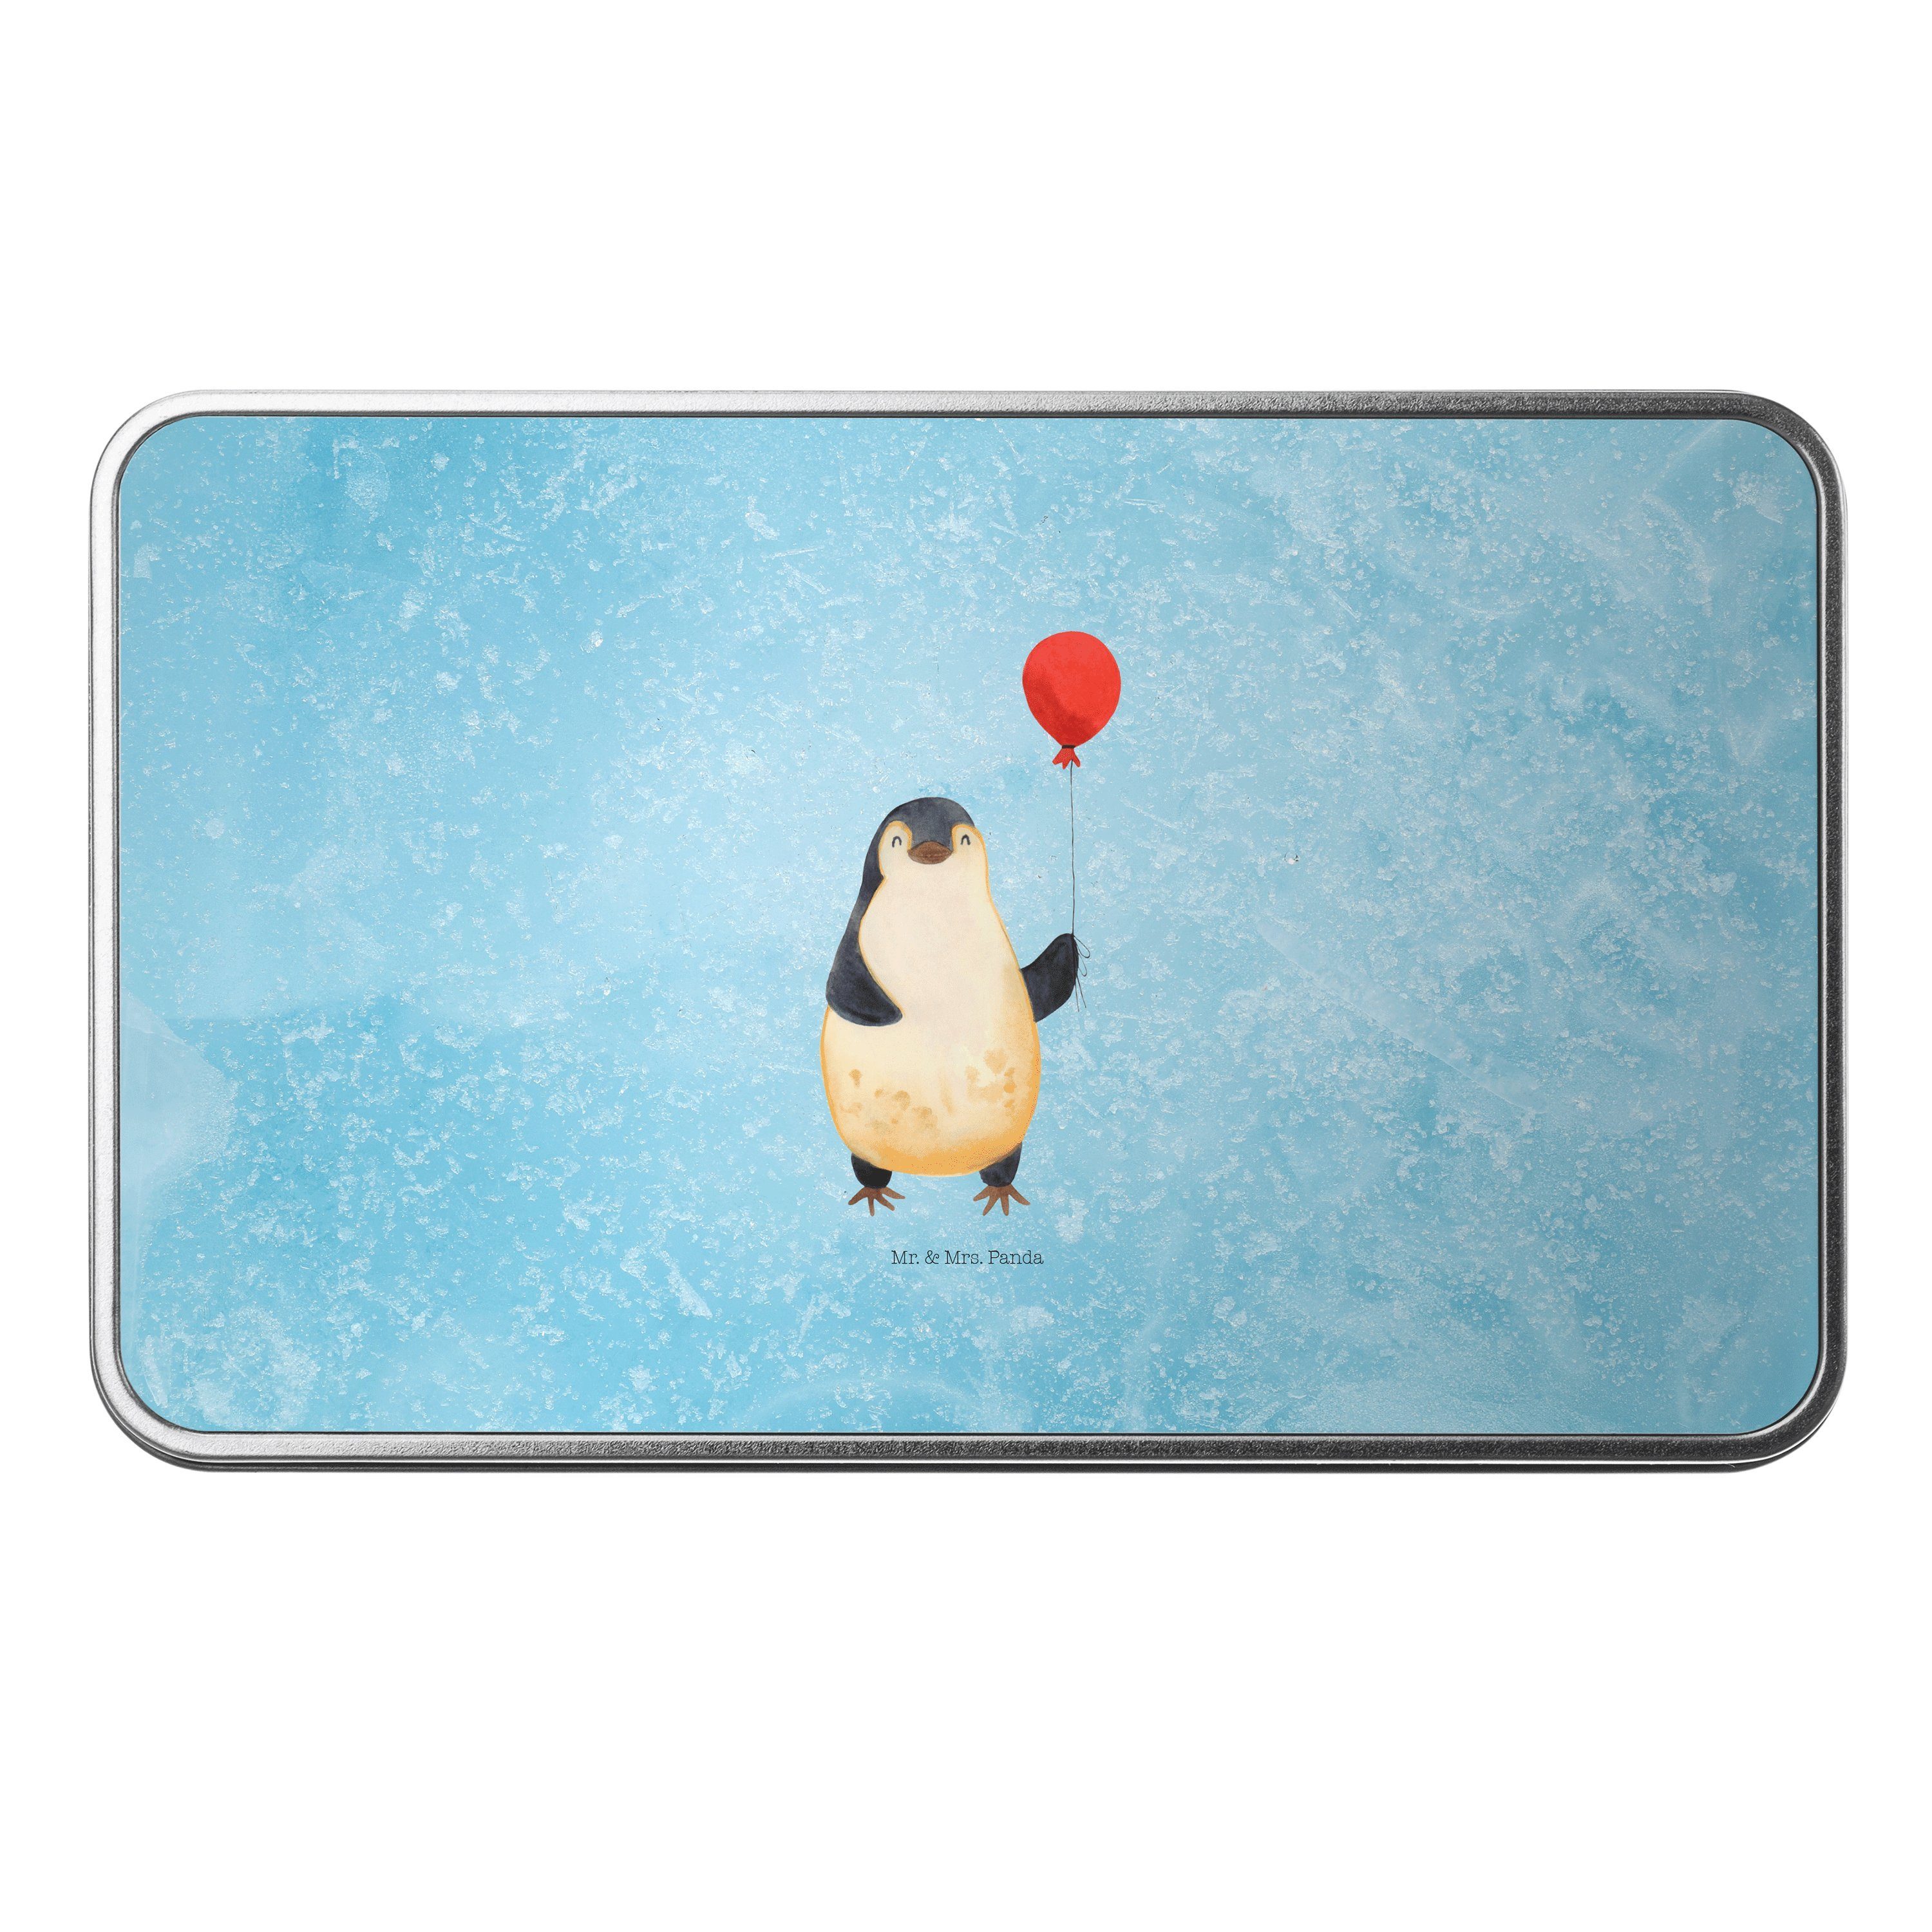 Mr. & Mrs. Panda Dose Pinguin Luftballon - Eisblau - Geschenk, Kind, Aluminiumdose, Geschen (1 St)